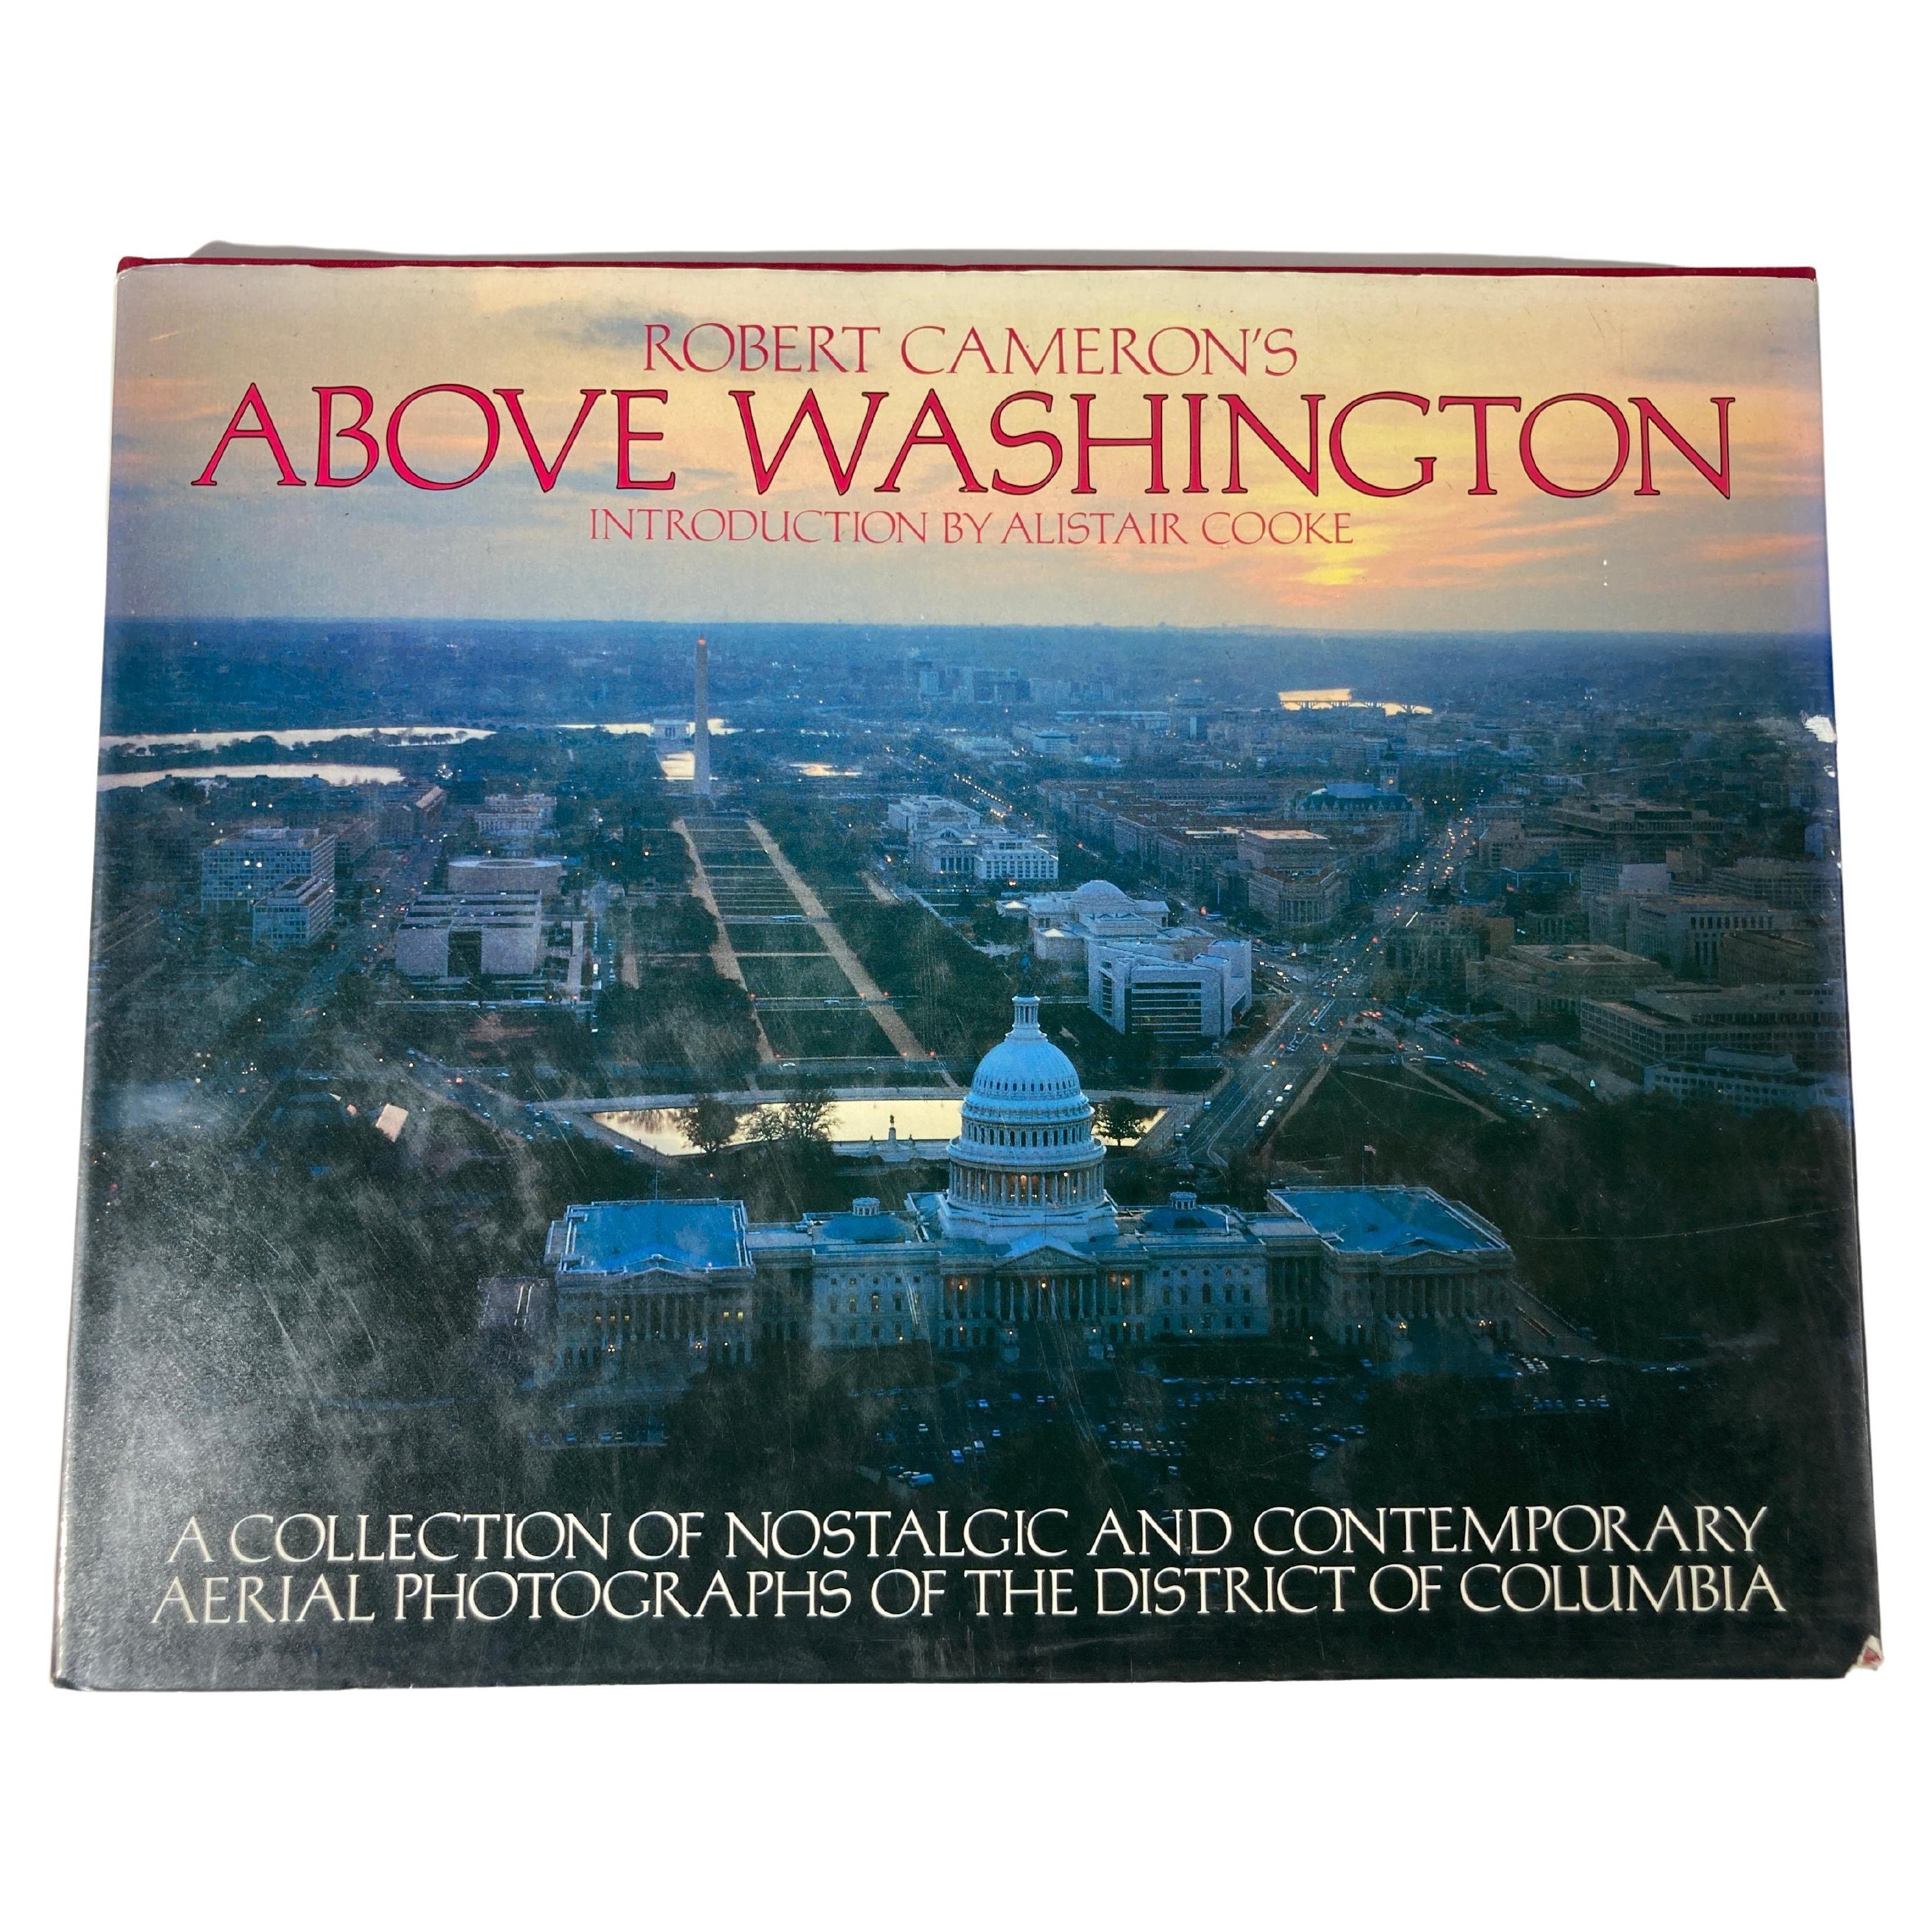 Above Washington by Robert Cameron